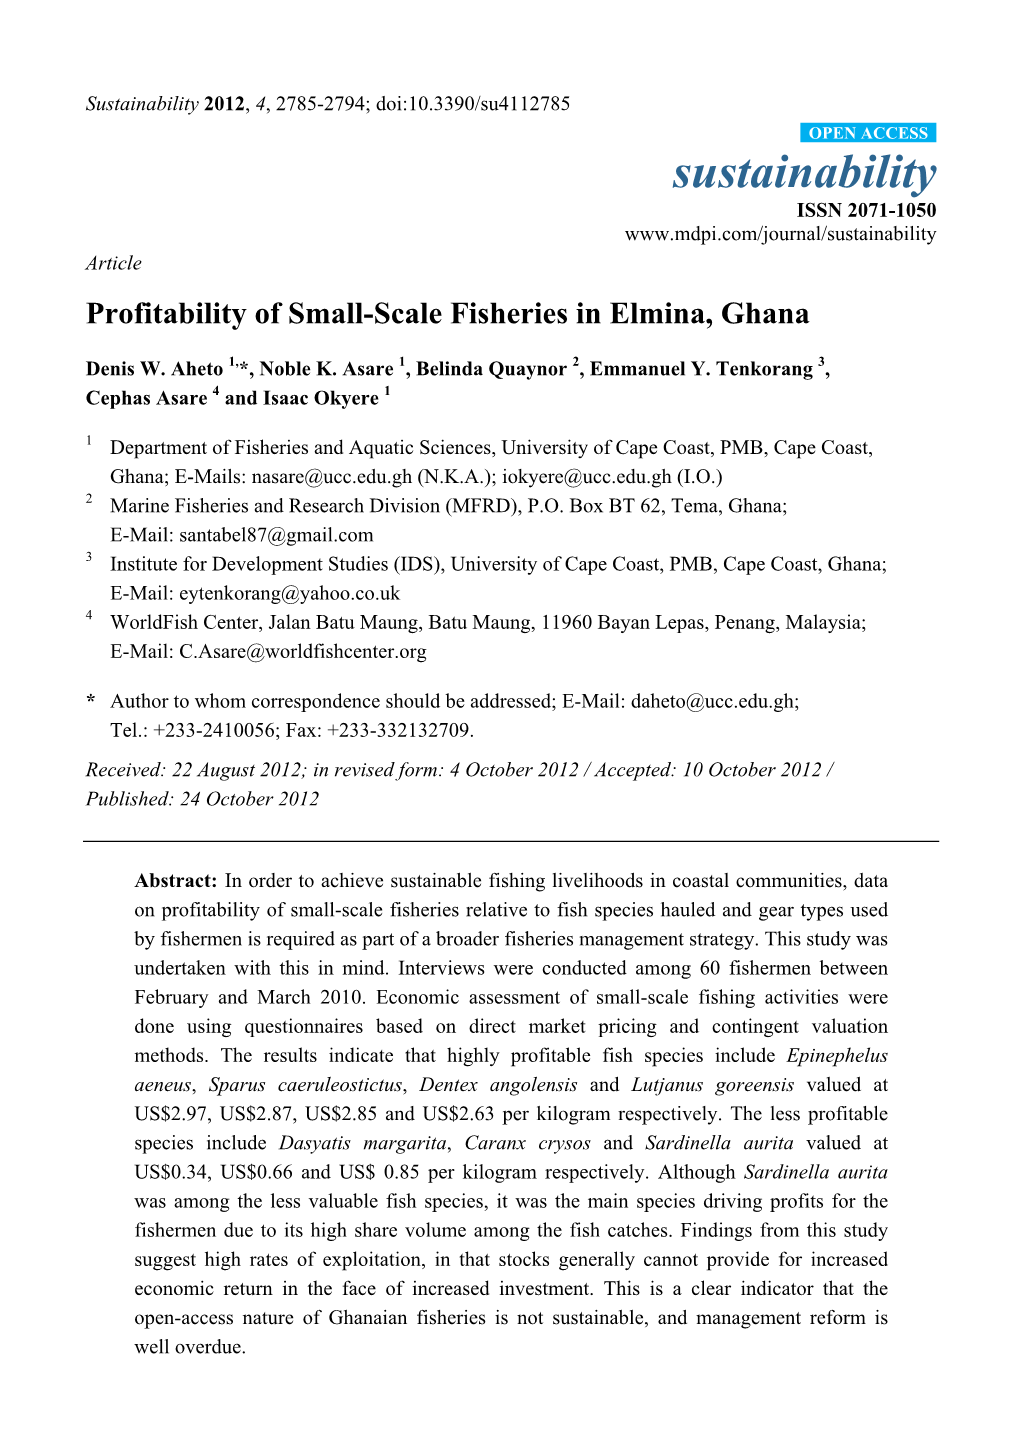 Profitability of Small-Scale Fisheries in Elmina, Ghana